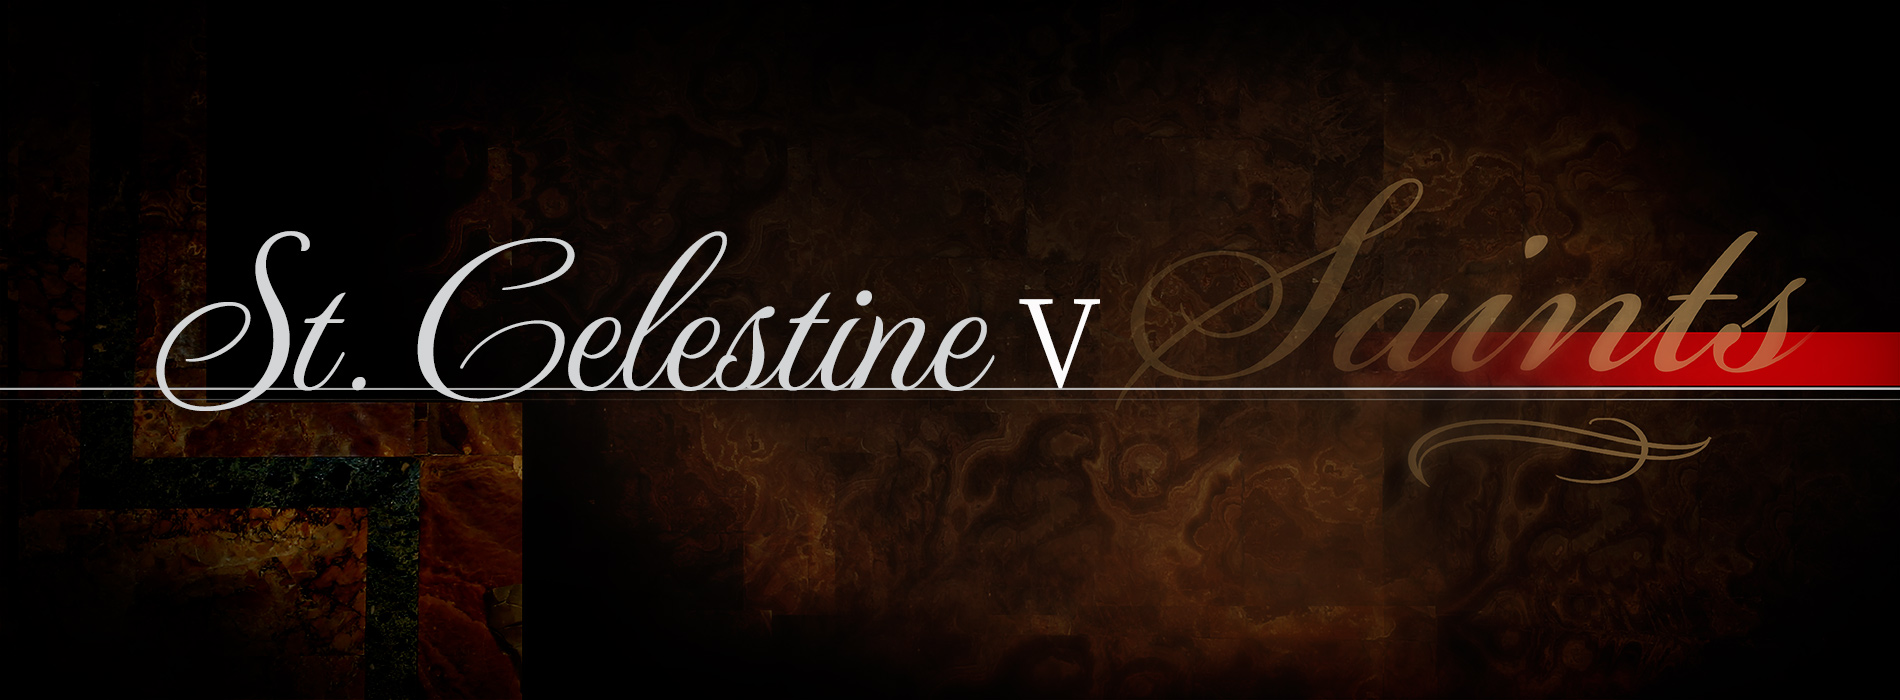 St. Celestine V